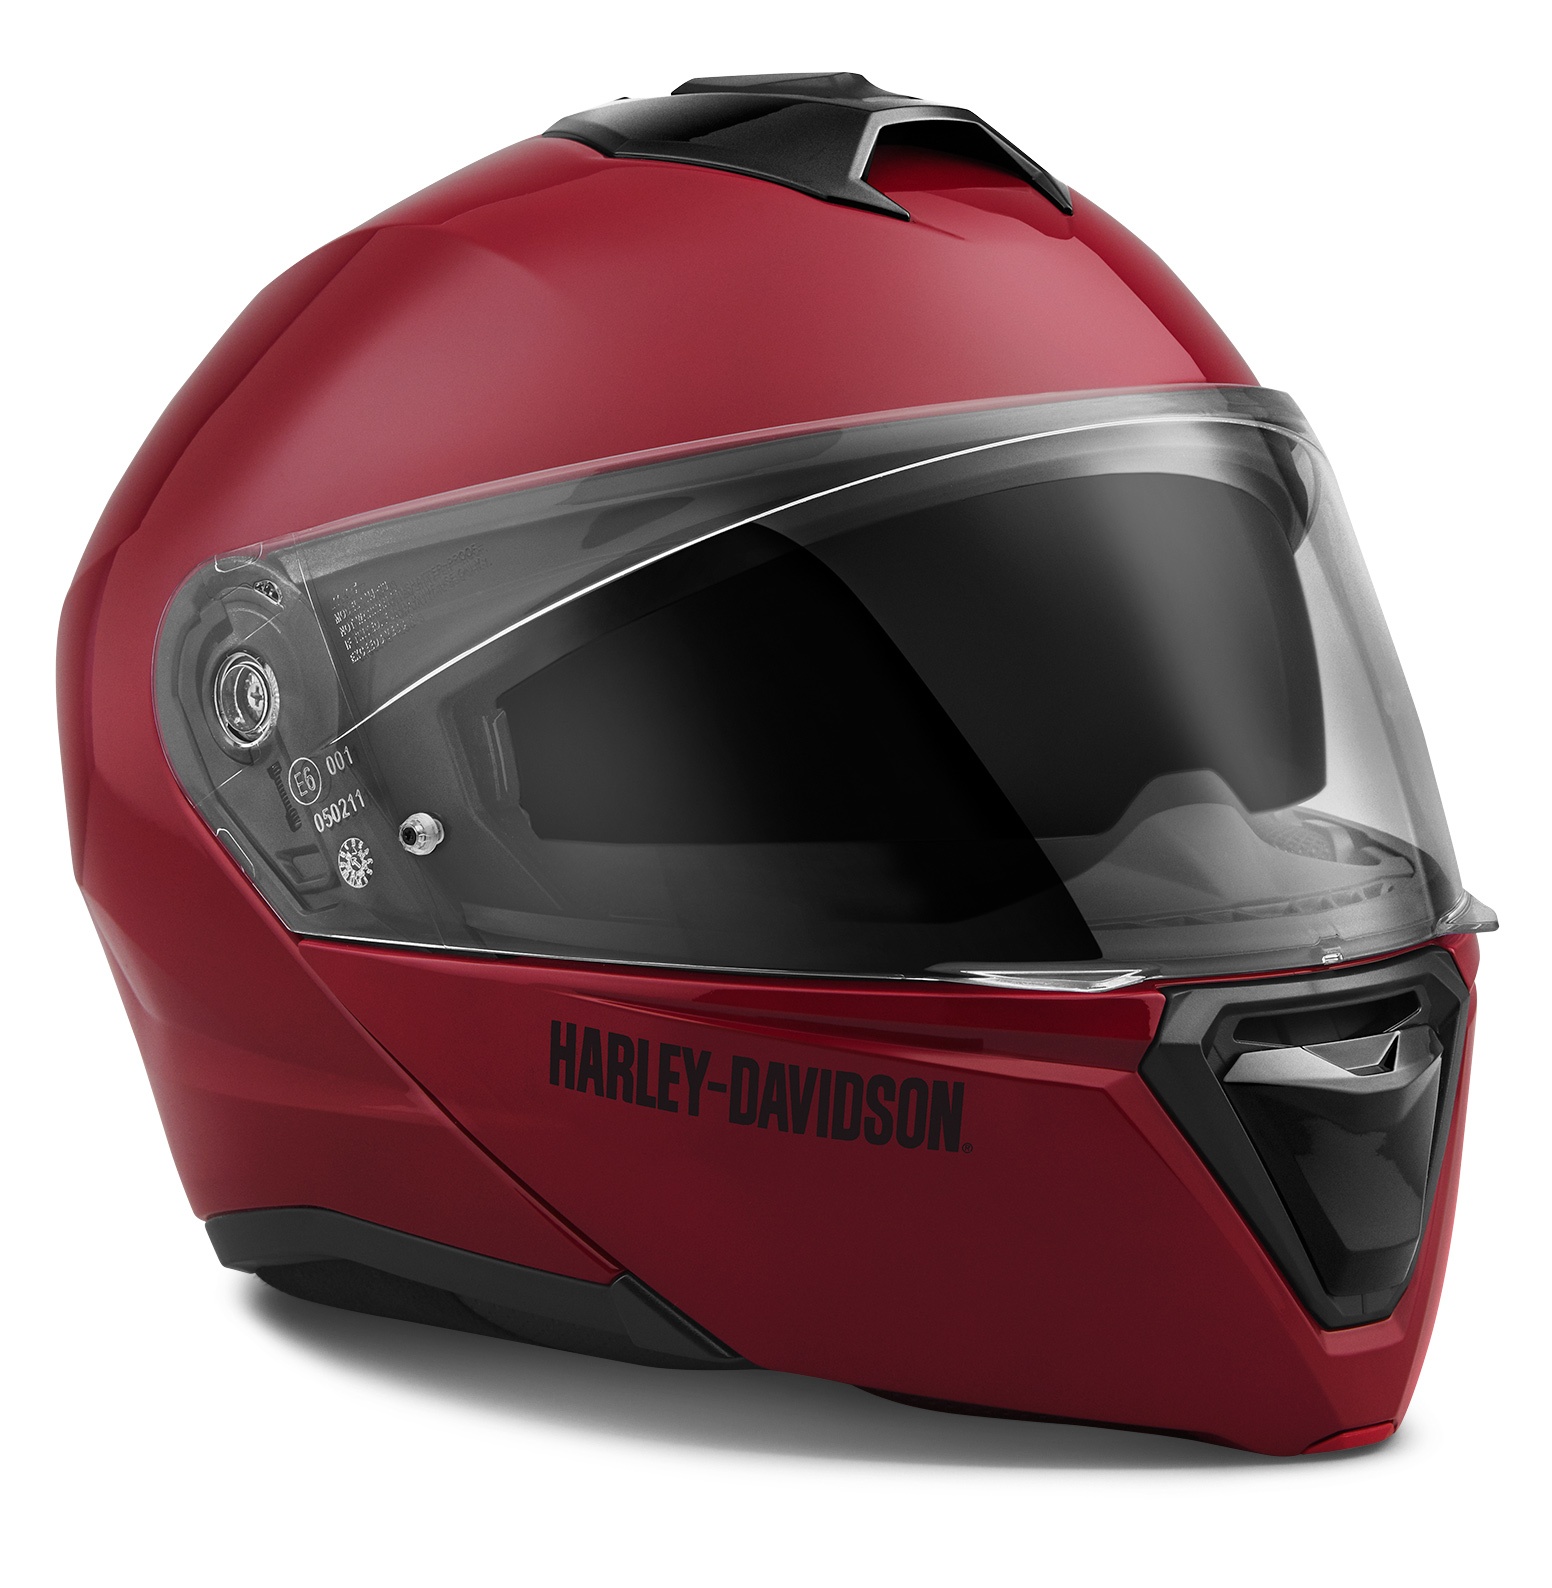 98122 21vx Harley Davidson Helmet Capstone H31 Modular Red Ece At Thunderbike Shop